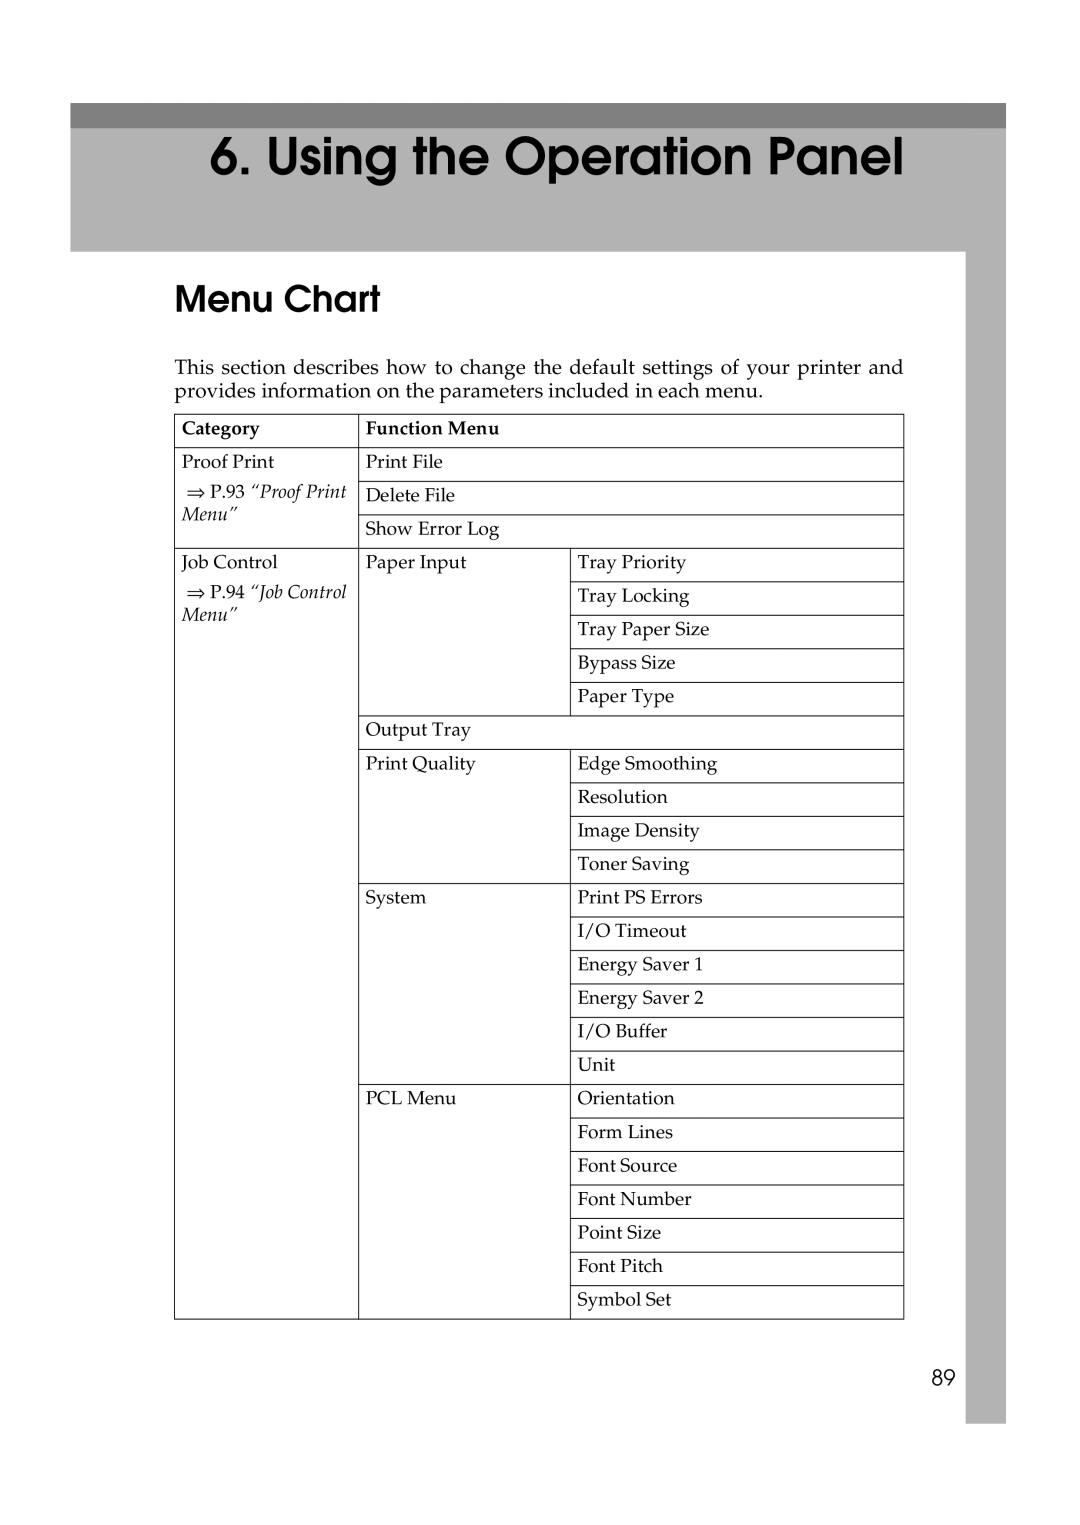 Ricoh Aficio AP2700 Using the Operation Panel, Menu Chart, Category, Function Menu, ⇒ P.93 “Proof Print, Menu” 